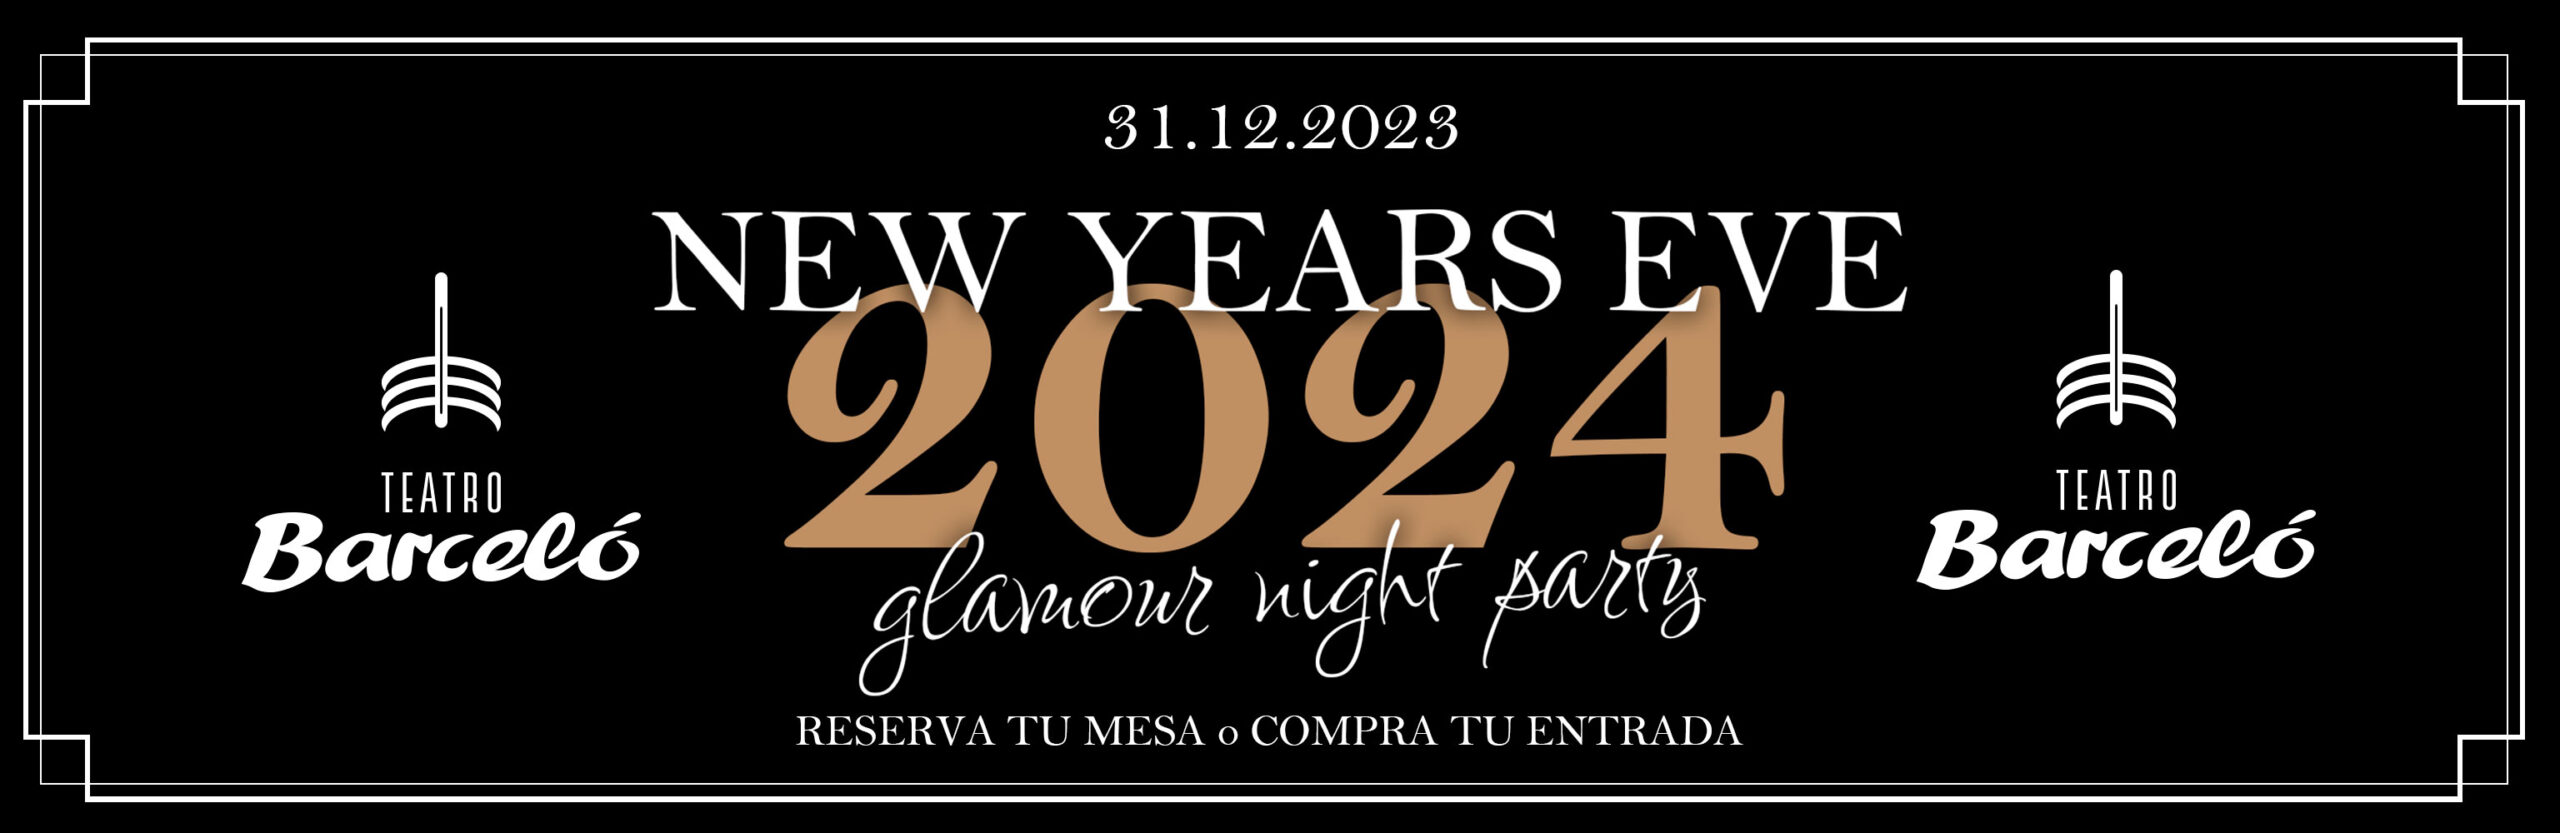 New Years Eve 2024 en Teatro Barceló | 31.12.23